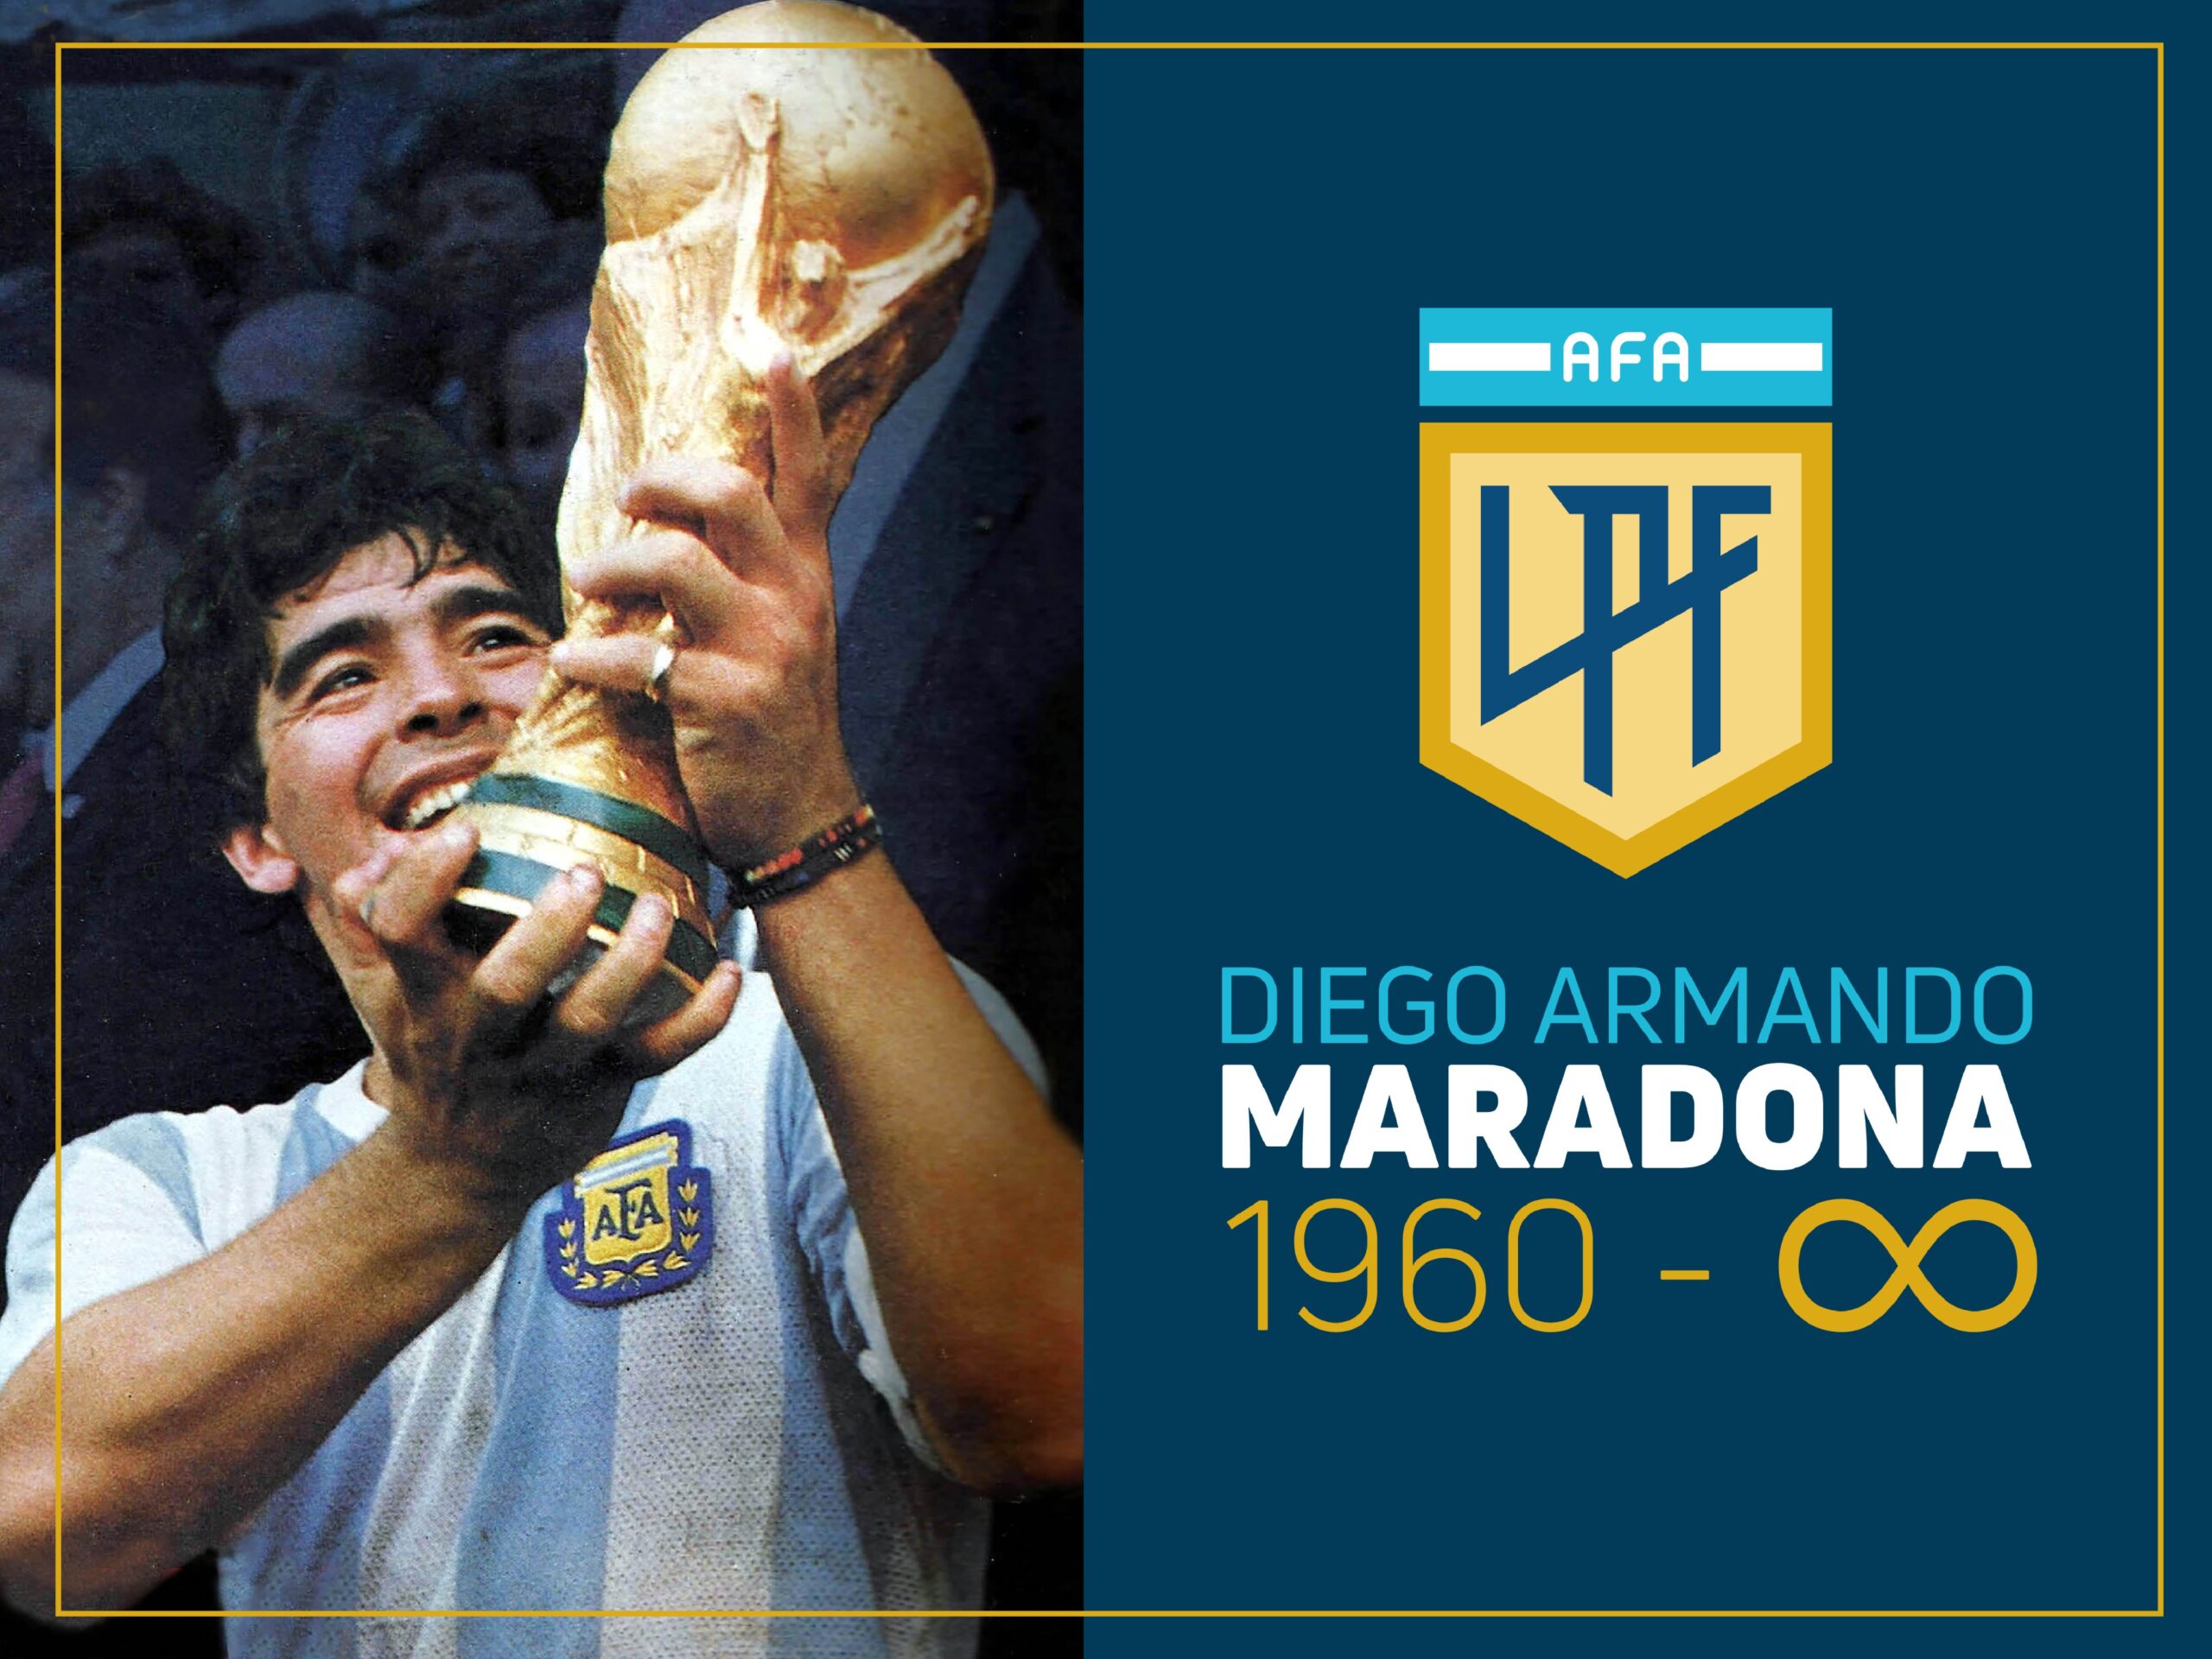 61º compleanno di Maradona, ecco le iniziative in Primera División